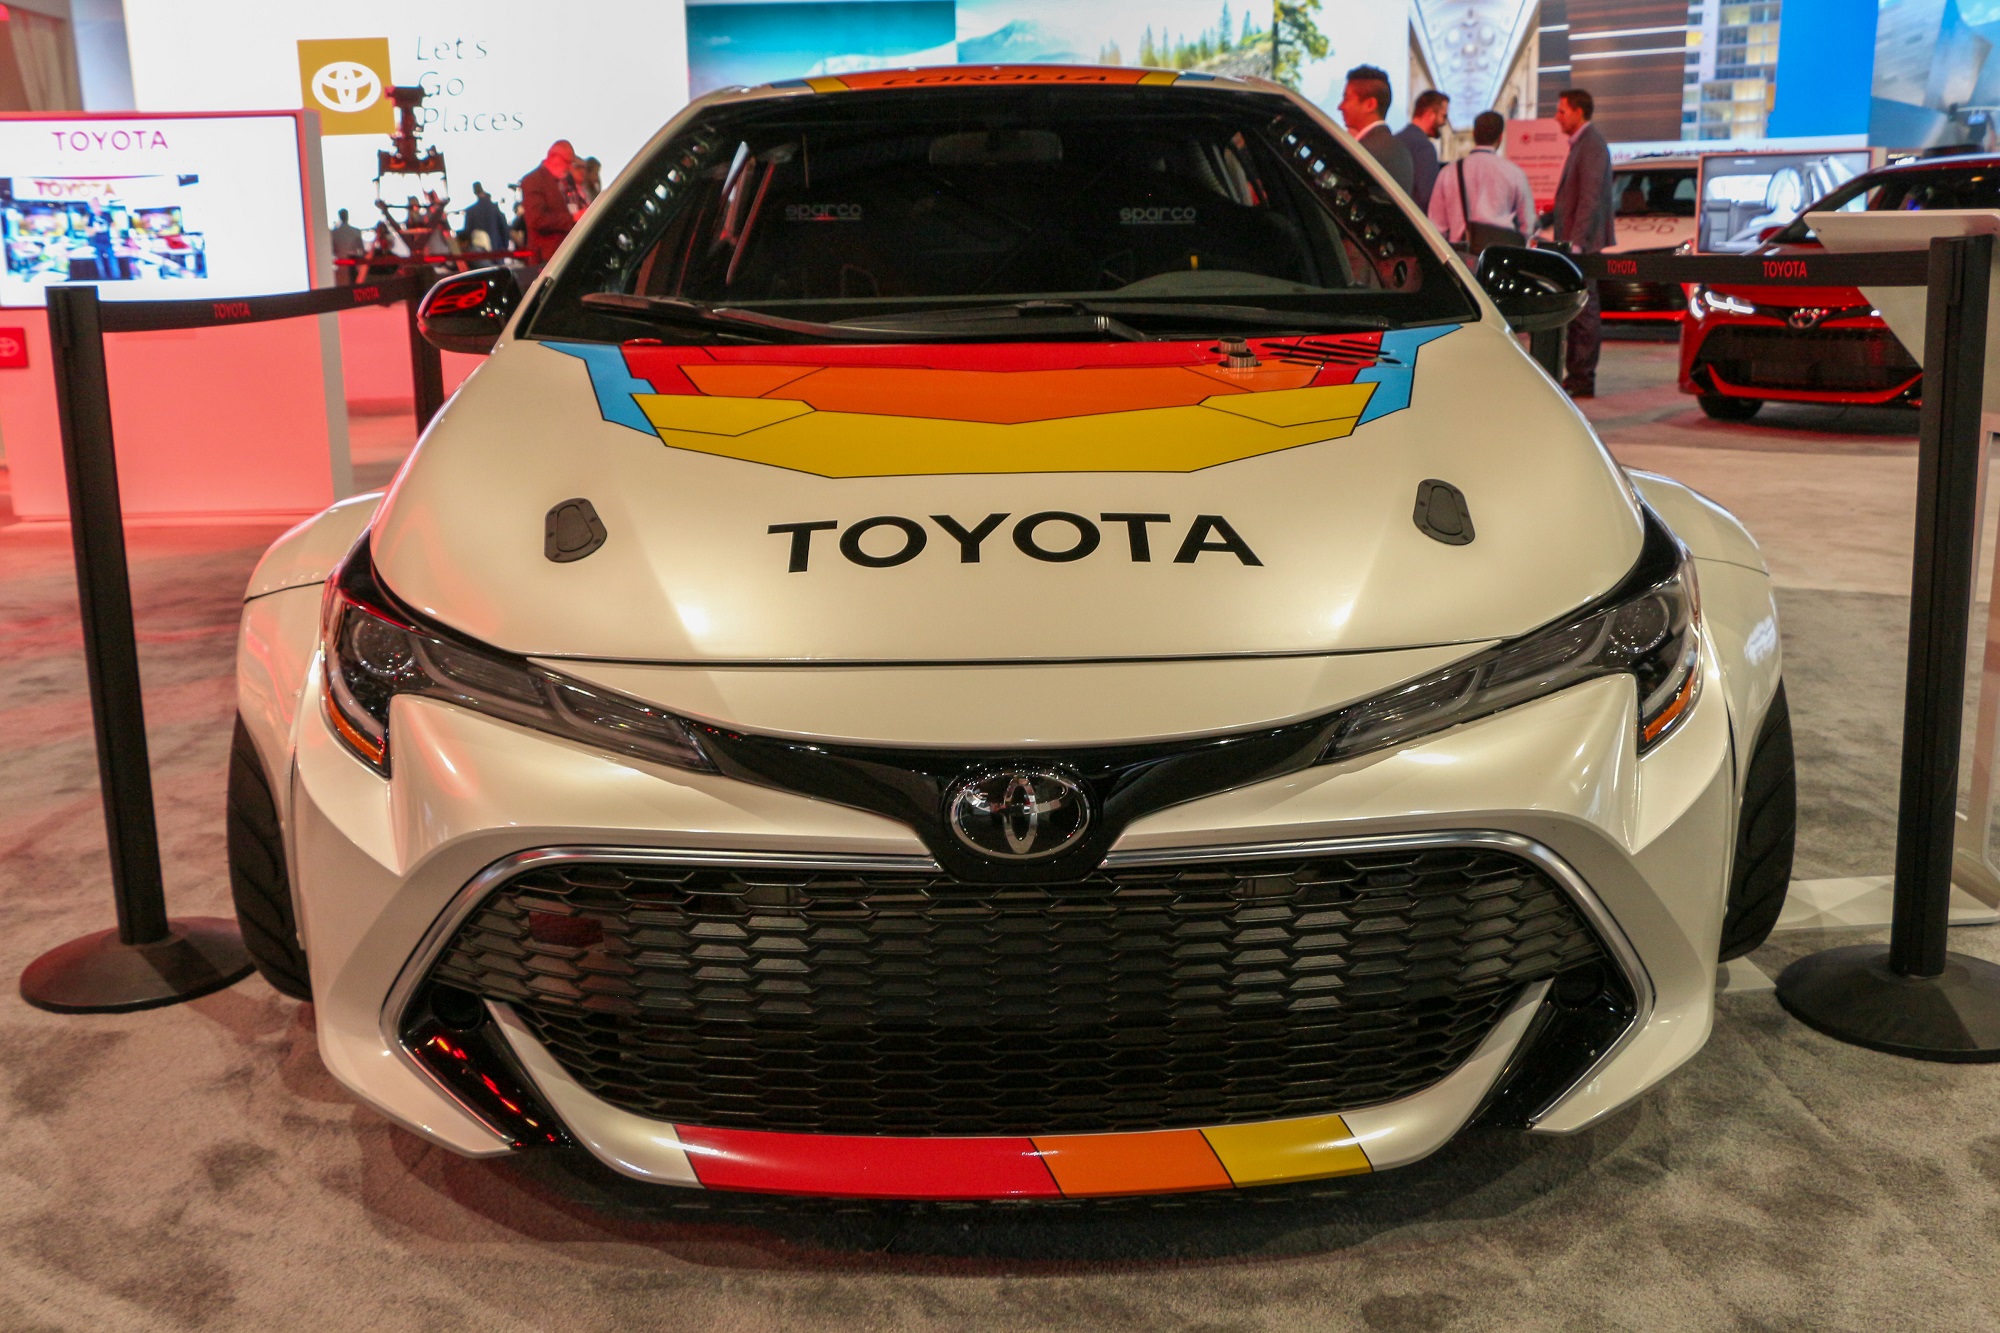 2019 Toyota Corolla Hatchback Fredric Aasbo Formula Drift Demo Car Los Angeles Auto Show